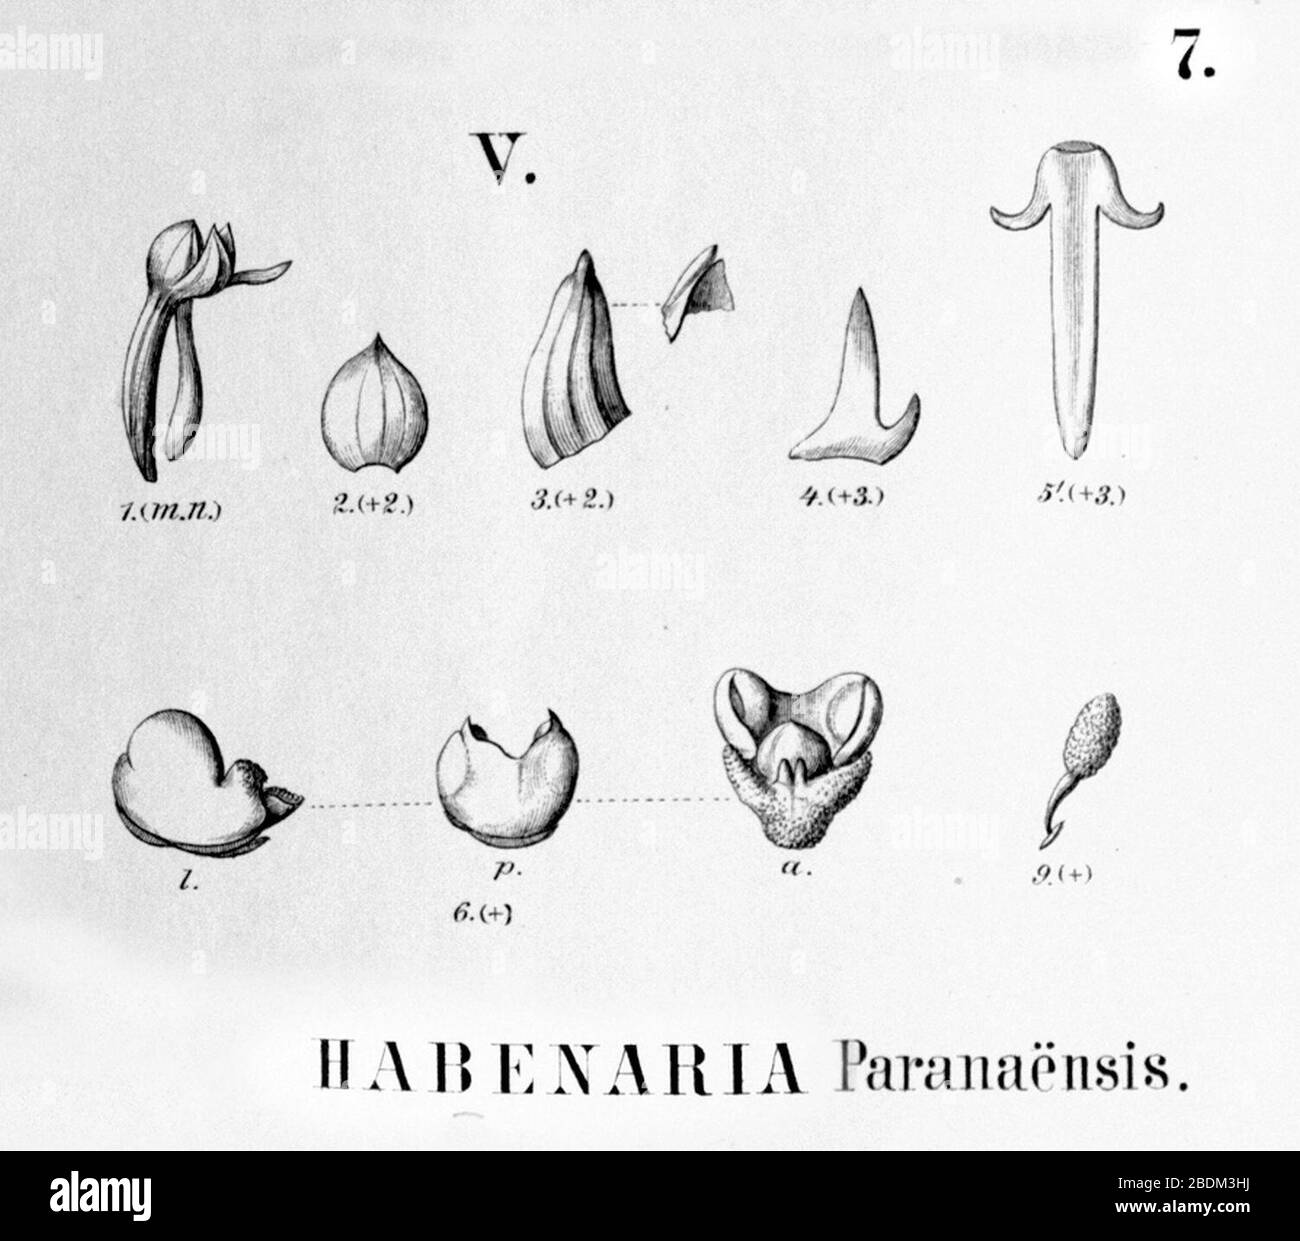 Habenaria paranaensis - cutout from Flora Brasiliensis 3-4-07-fig V. Stock Photo